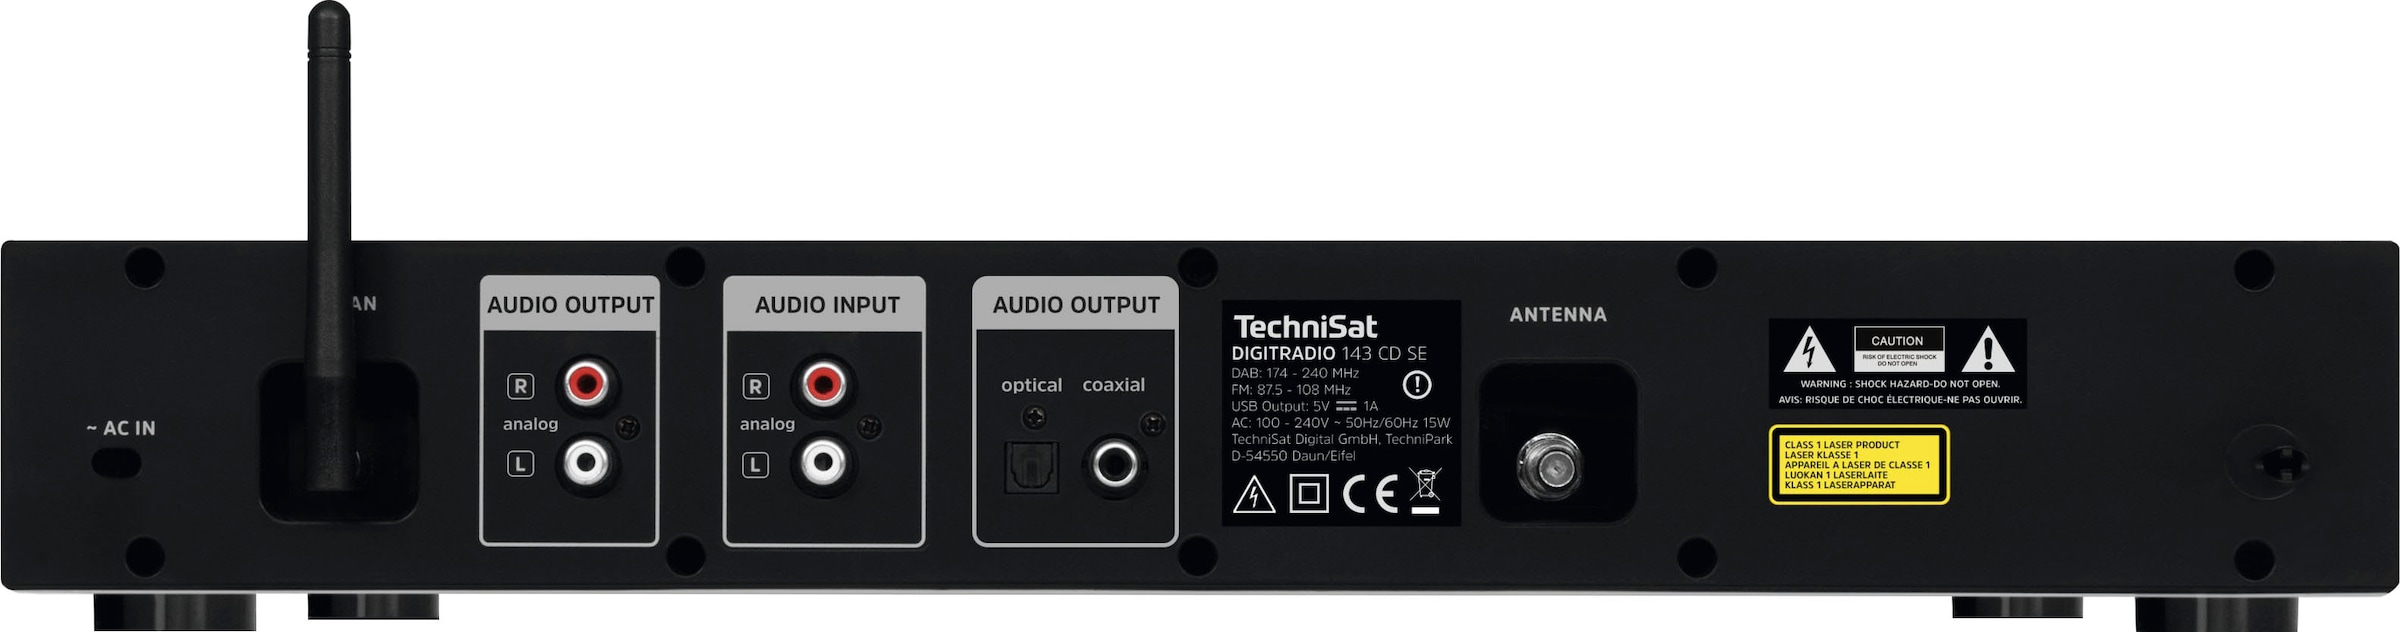 OTTO (Bluetooth-WLAN bei (DAB+)-UKW »DIGITRADIO jetzt mit CD RDS) TechniSat Digitalradio (DAB+) Internetradio-Digitalradio 143 bestellen (V3)«,